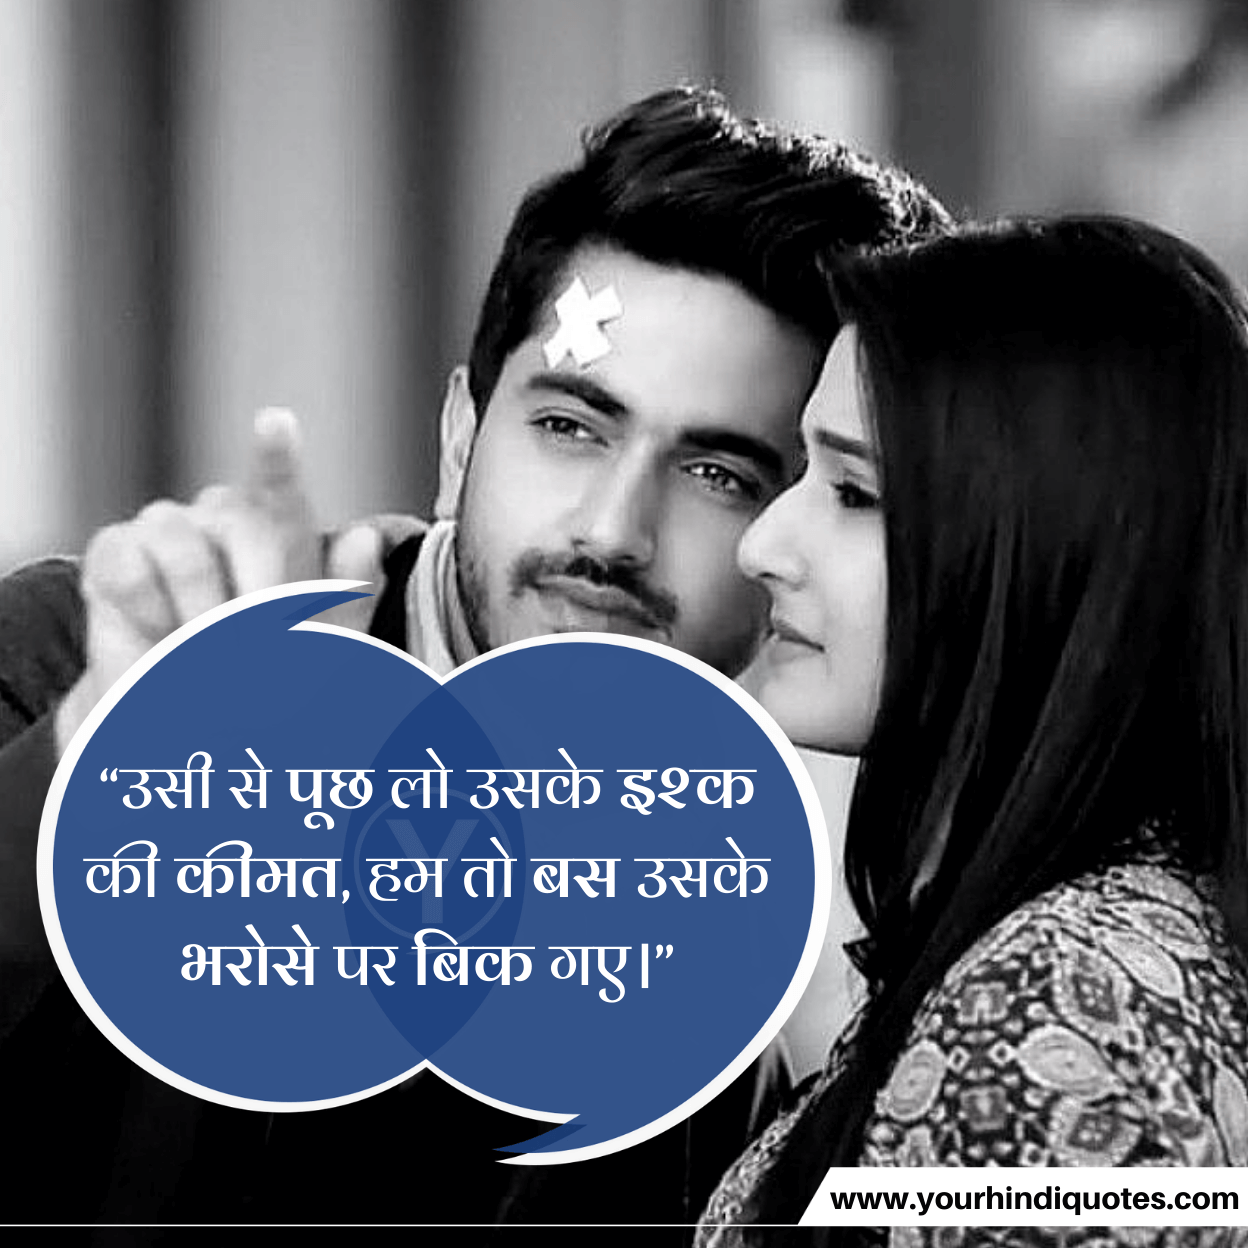 Emotional Hindi quotes images